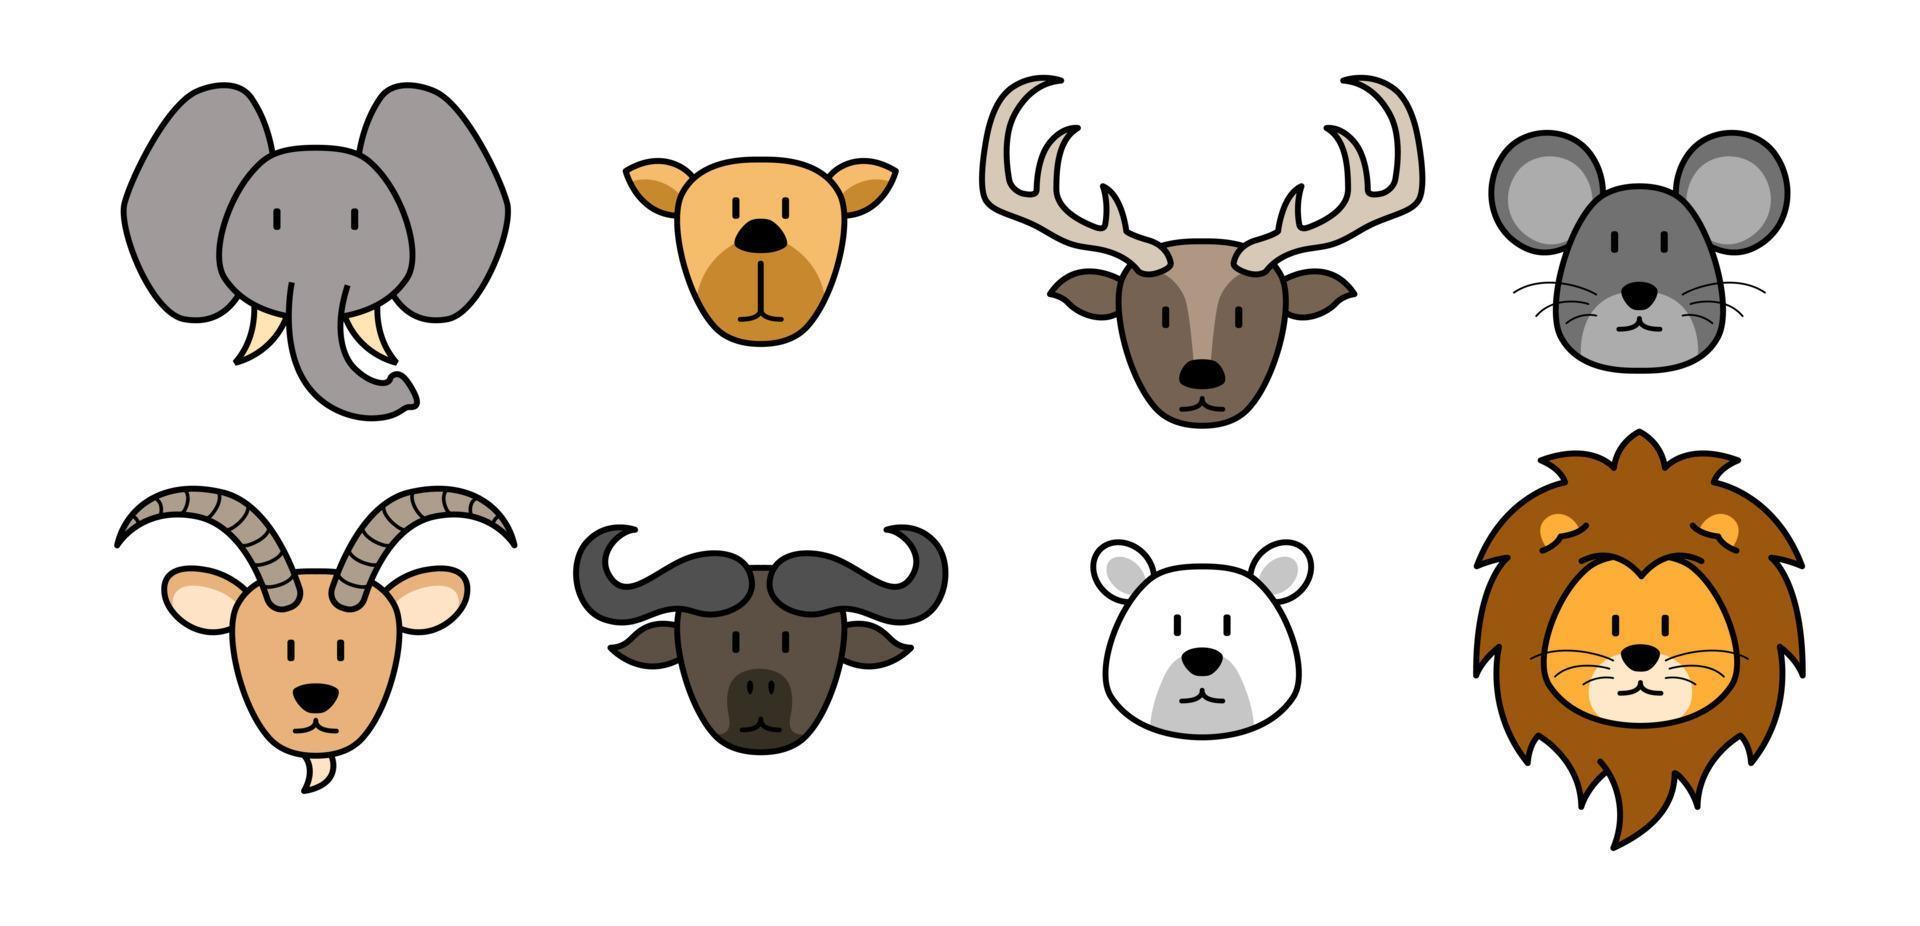 Cute animal icons vector